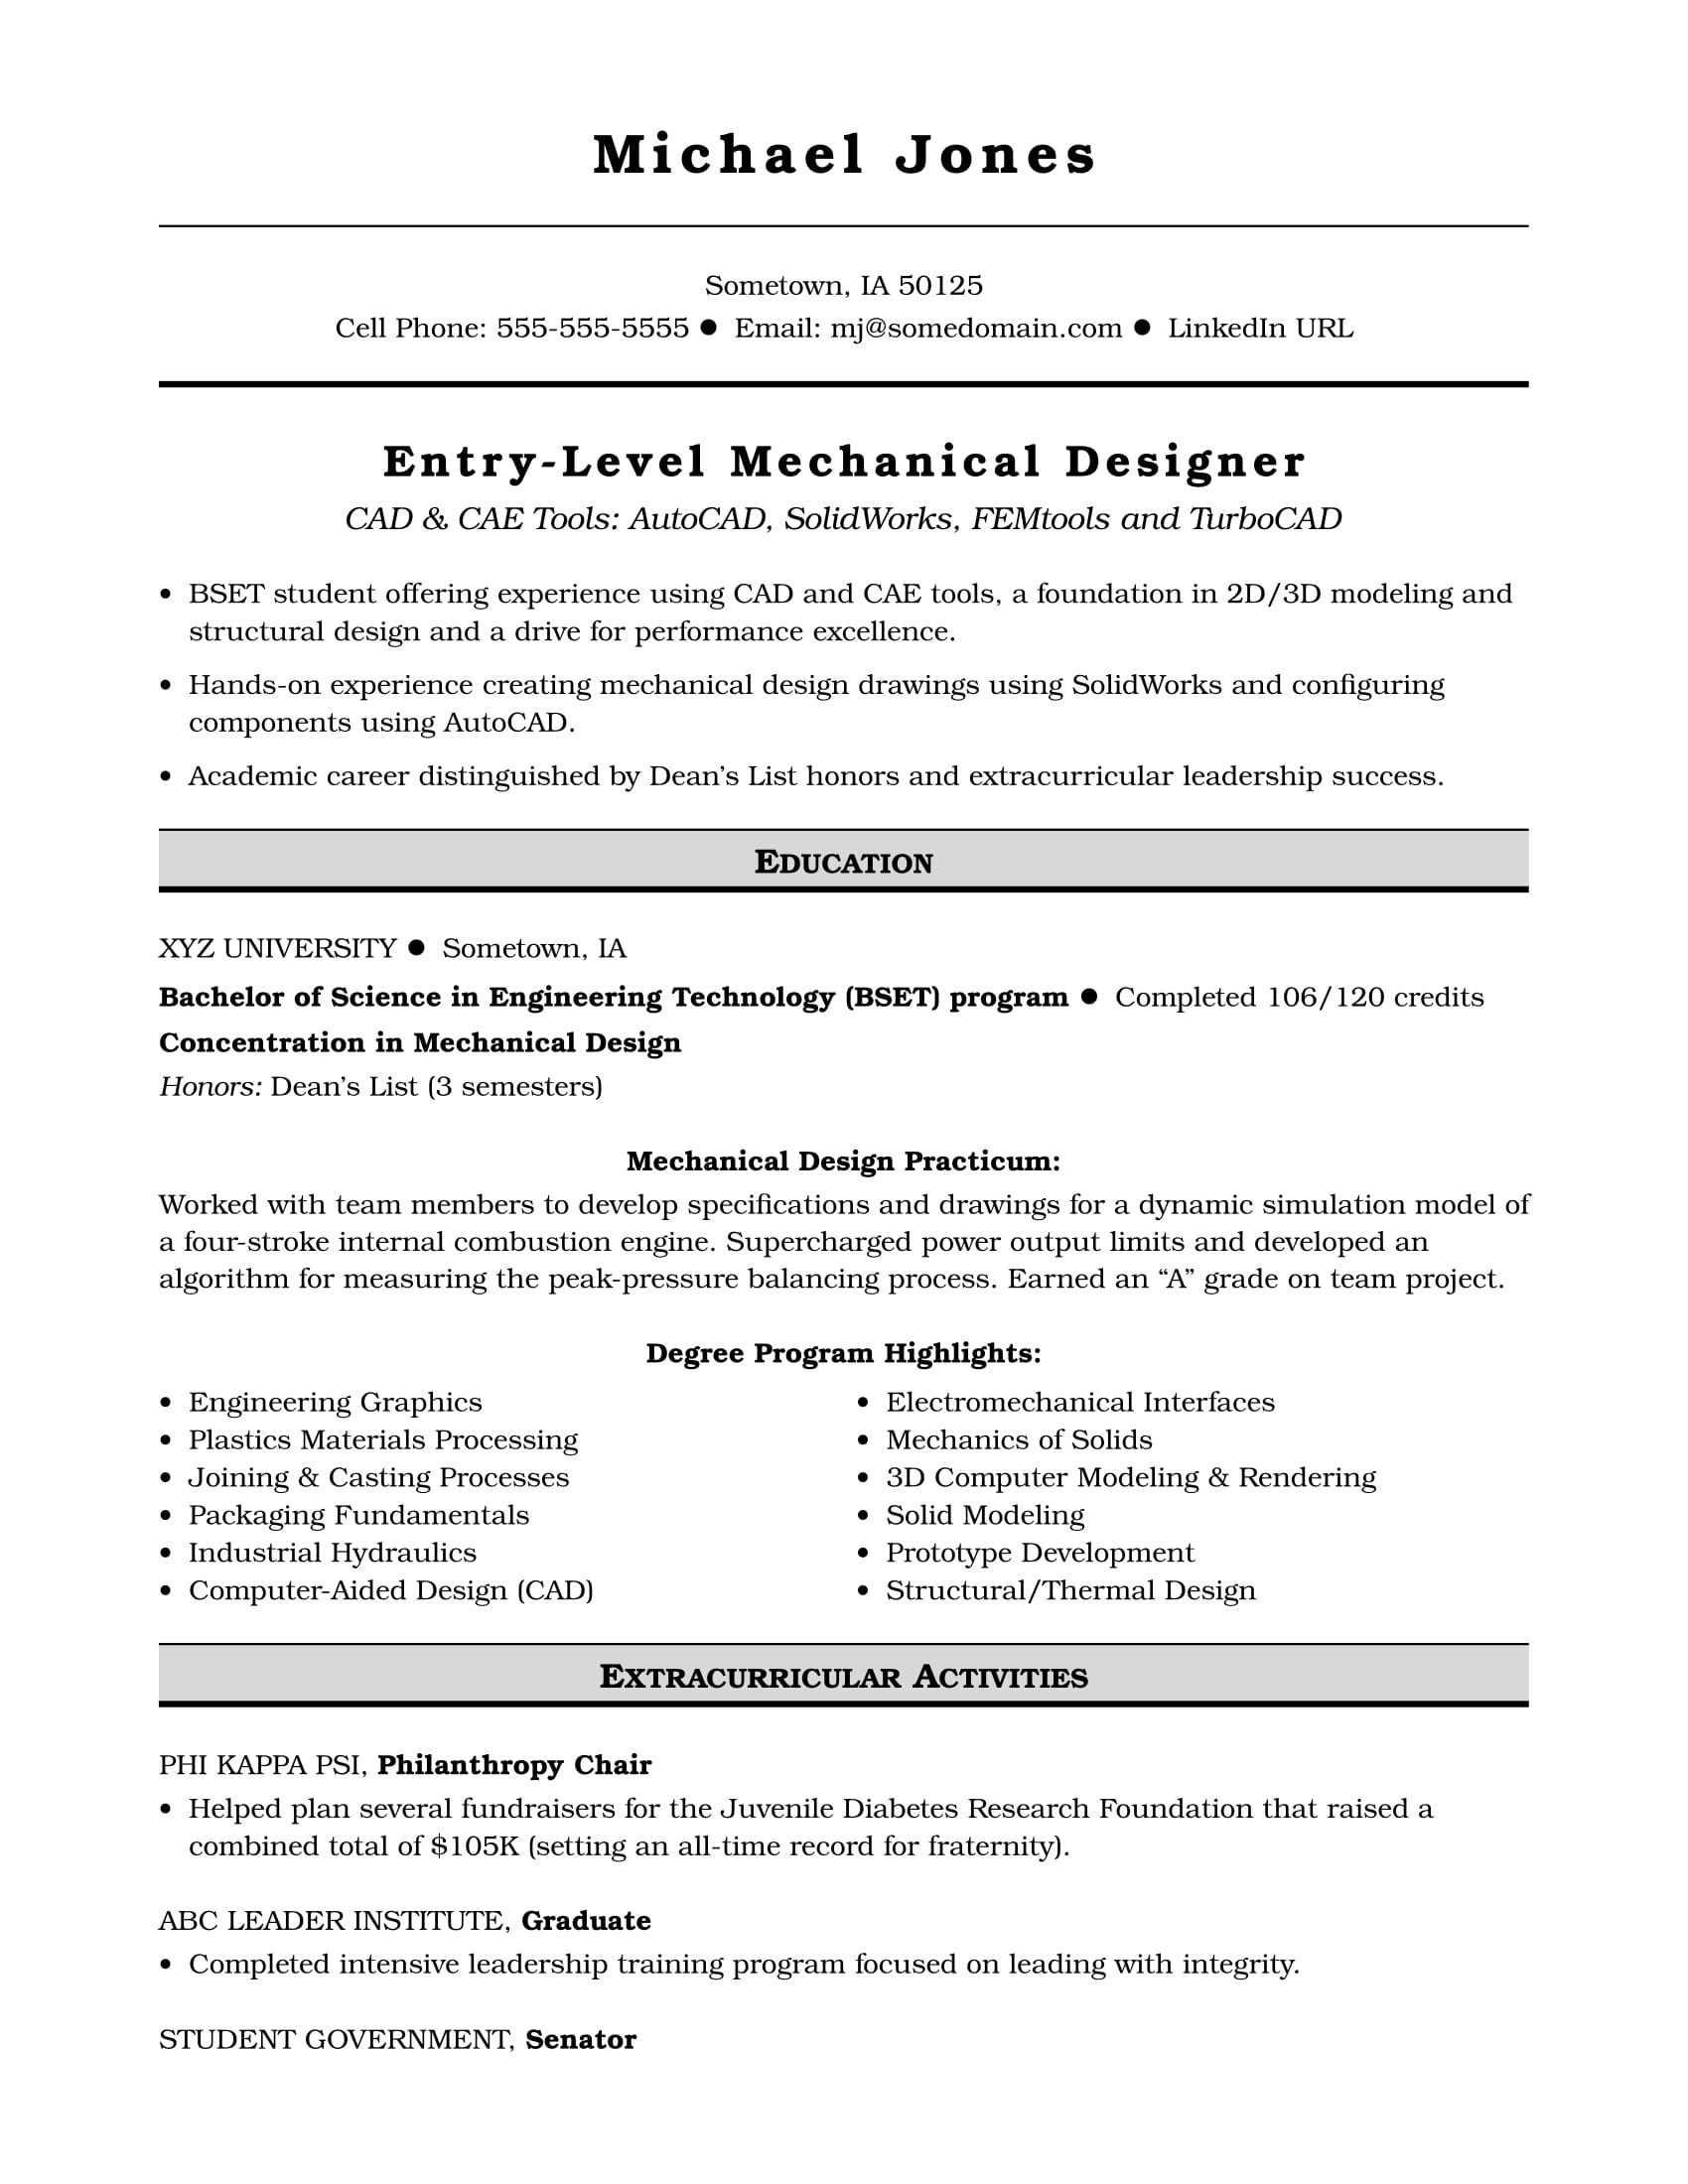 Samples Of Objective for Resume Entry Level Sample Resume for An Entry-level Mechanical Designer Monster.com